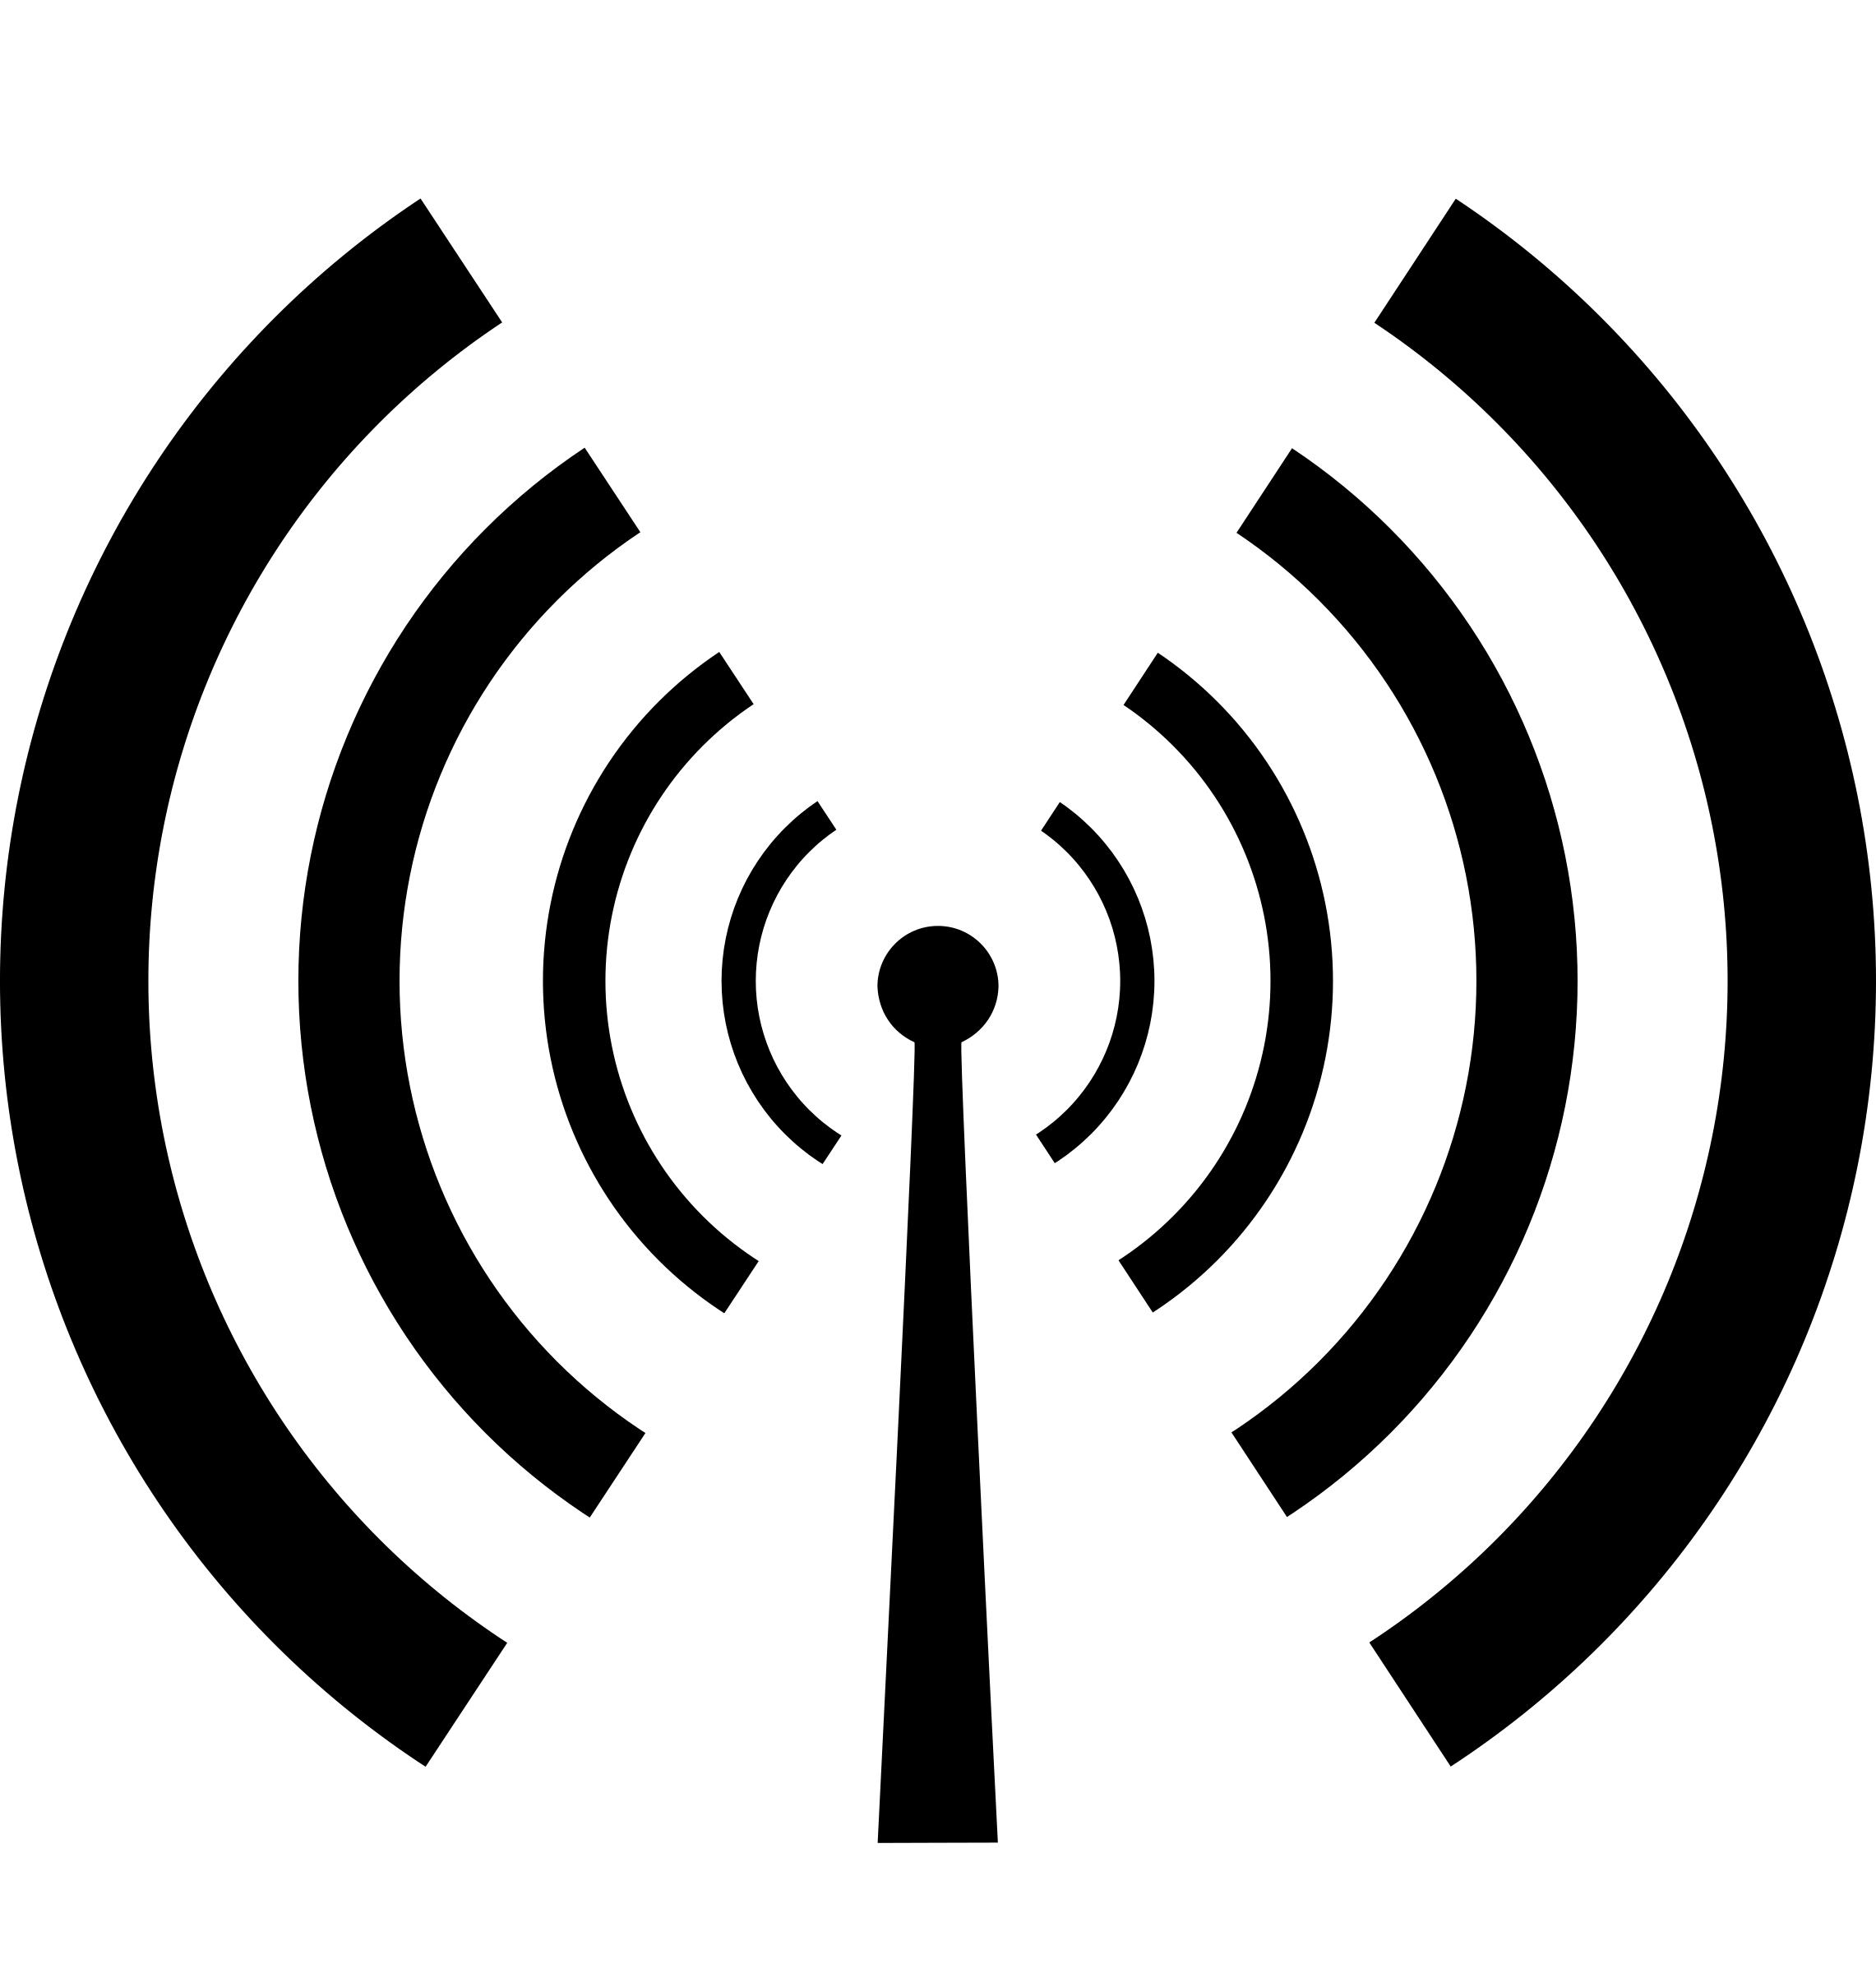 Antenna and radio waves png